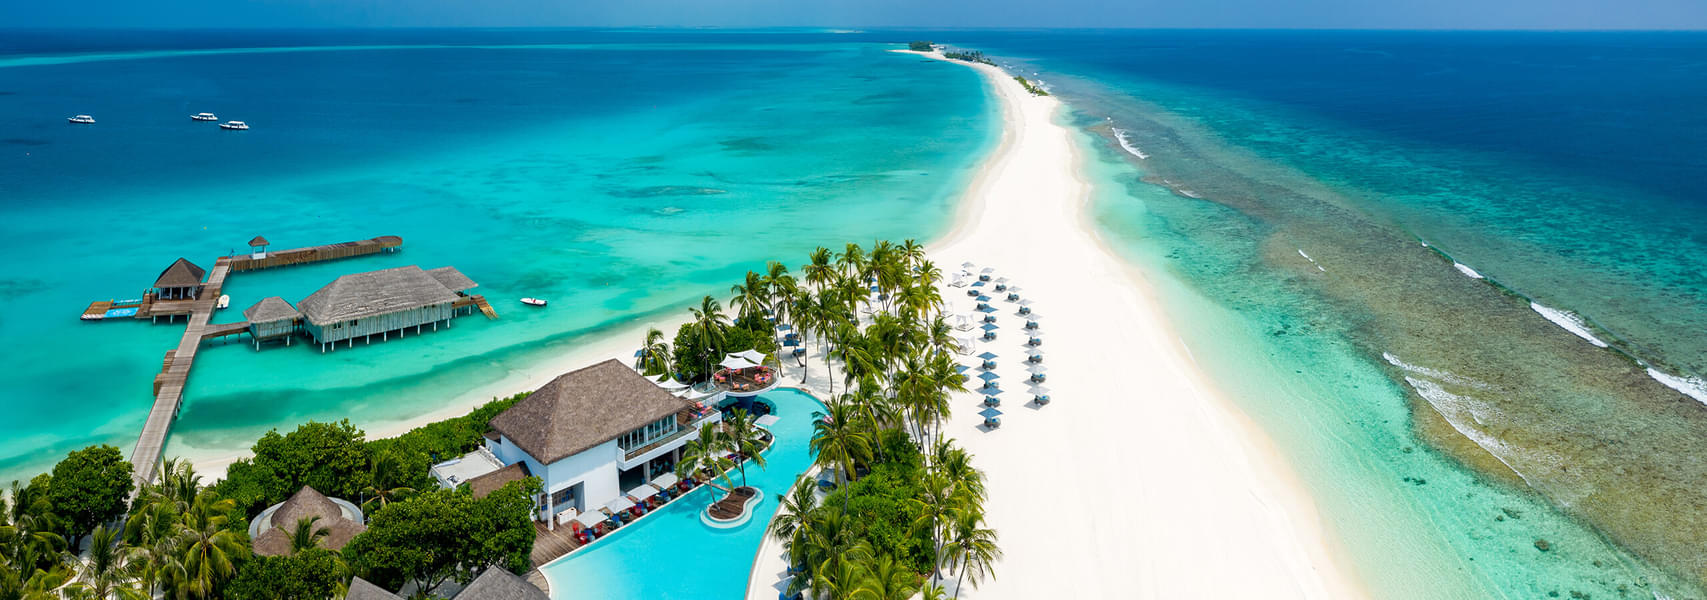 Finolhu Maldives Image